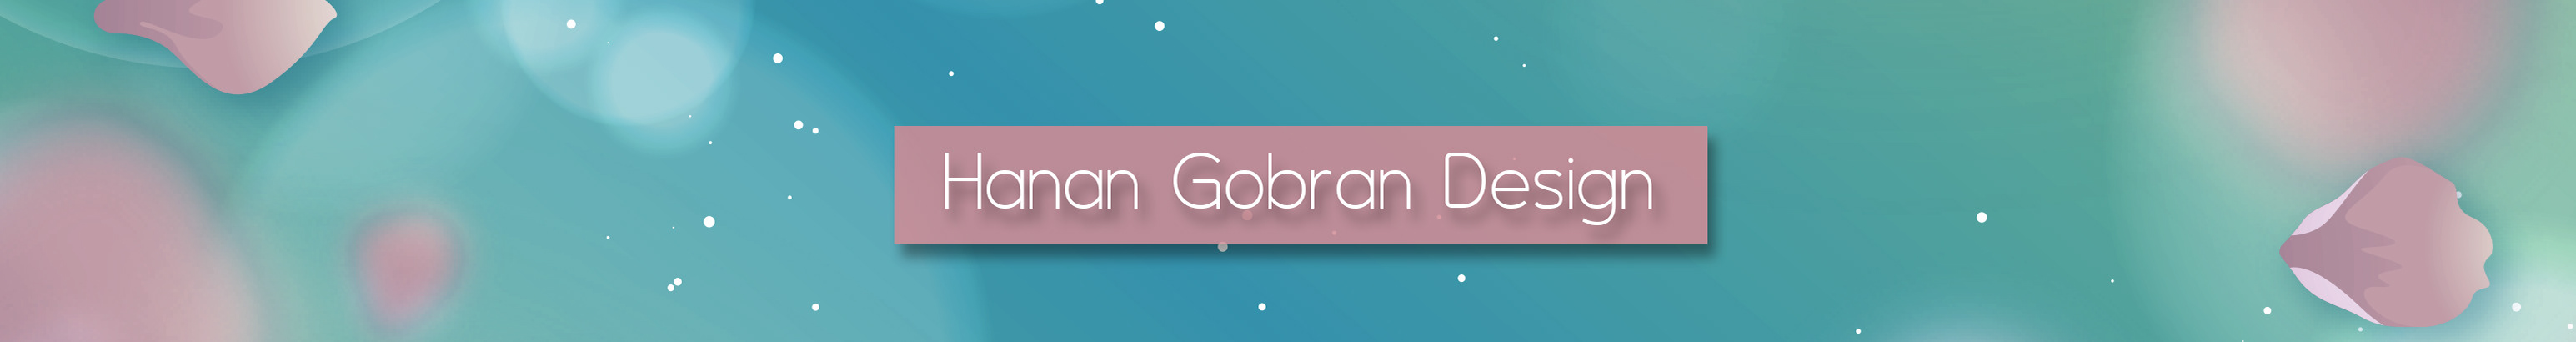 Hanan Gobran's profile banner